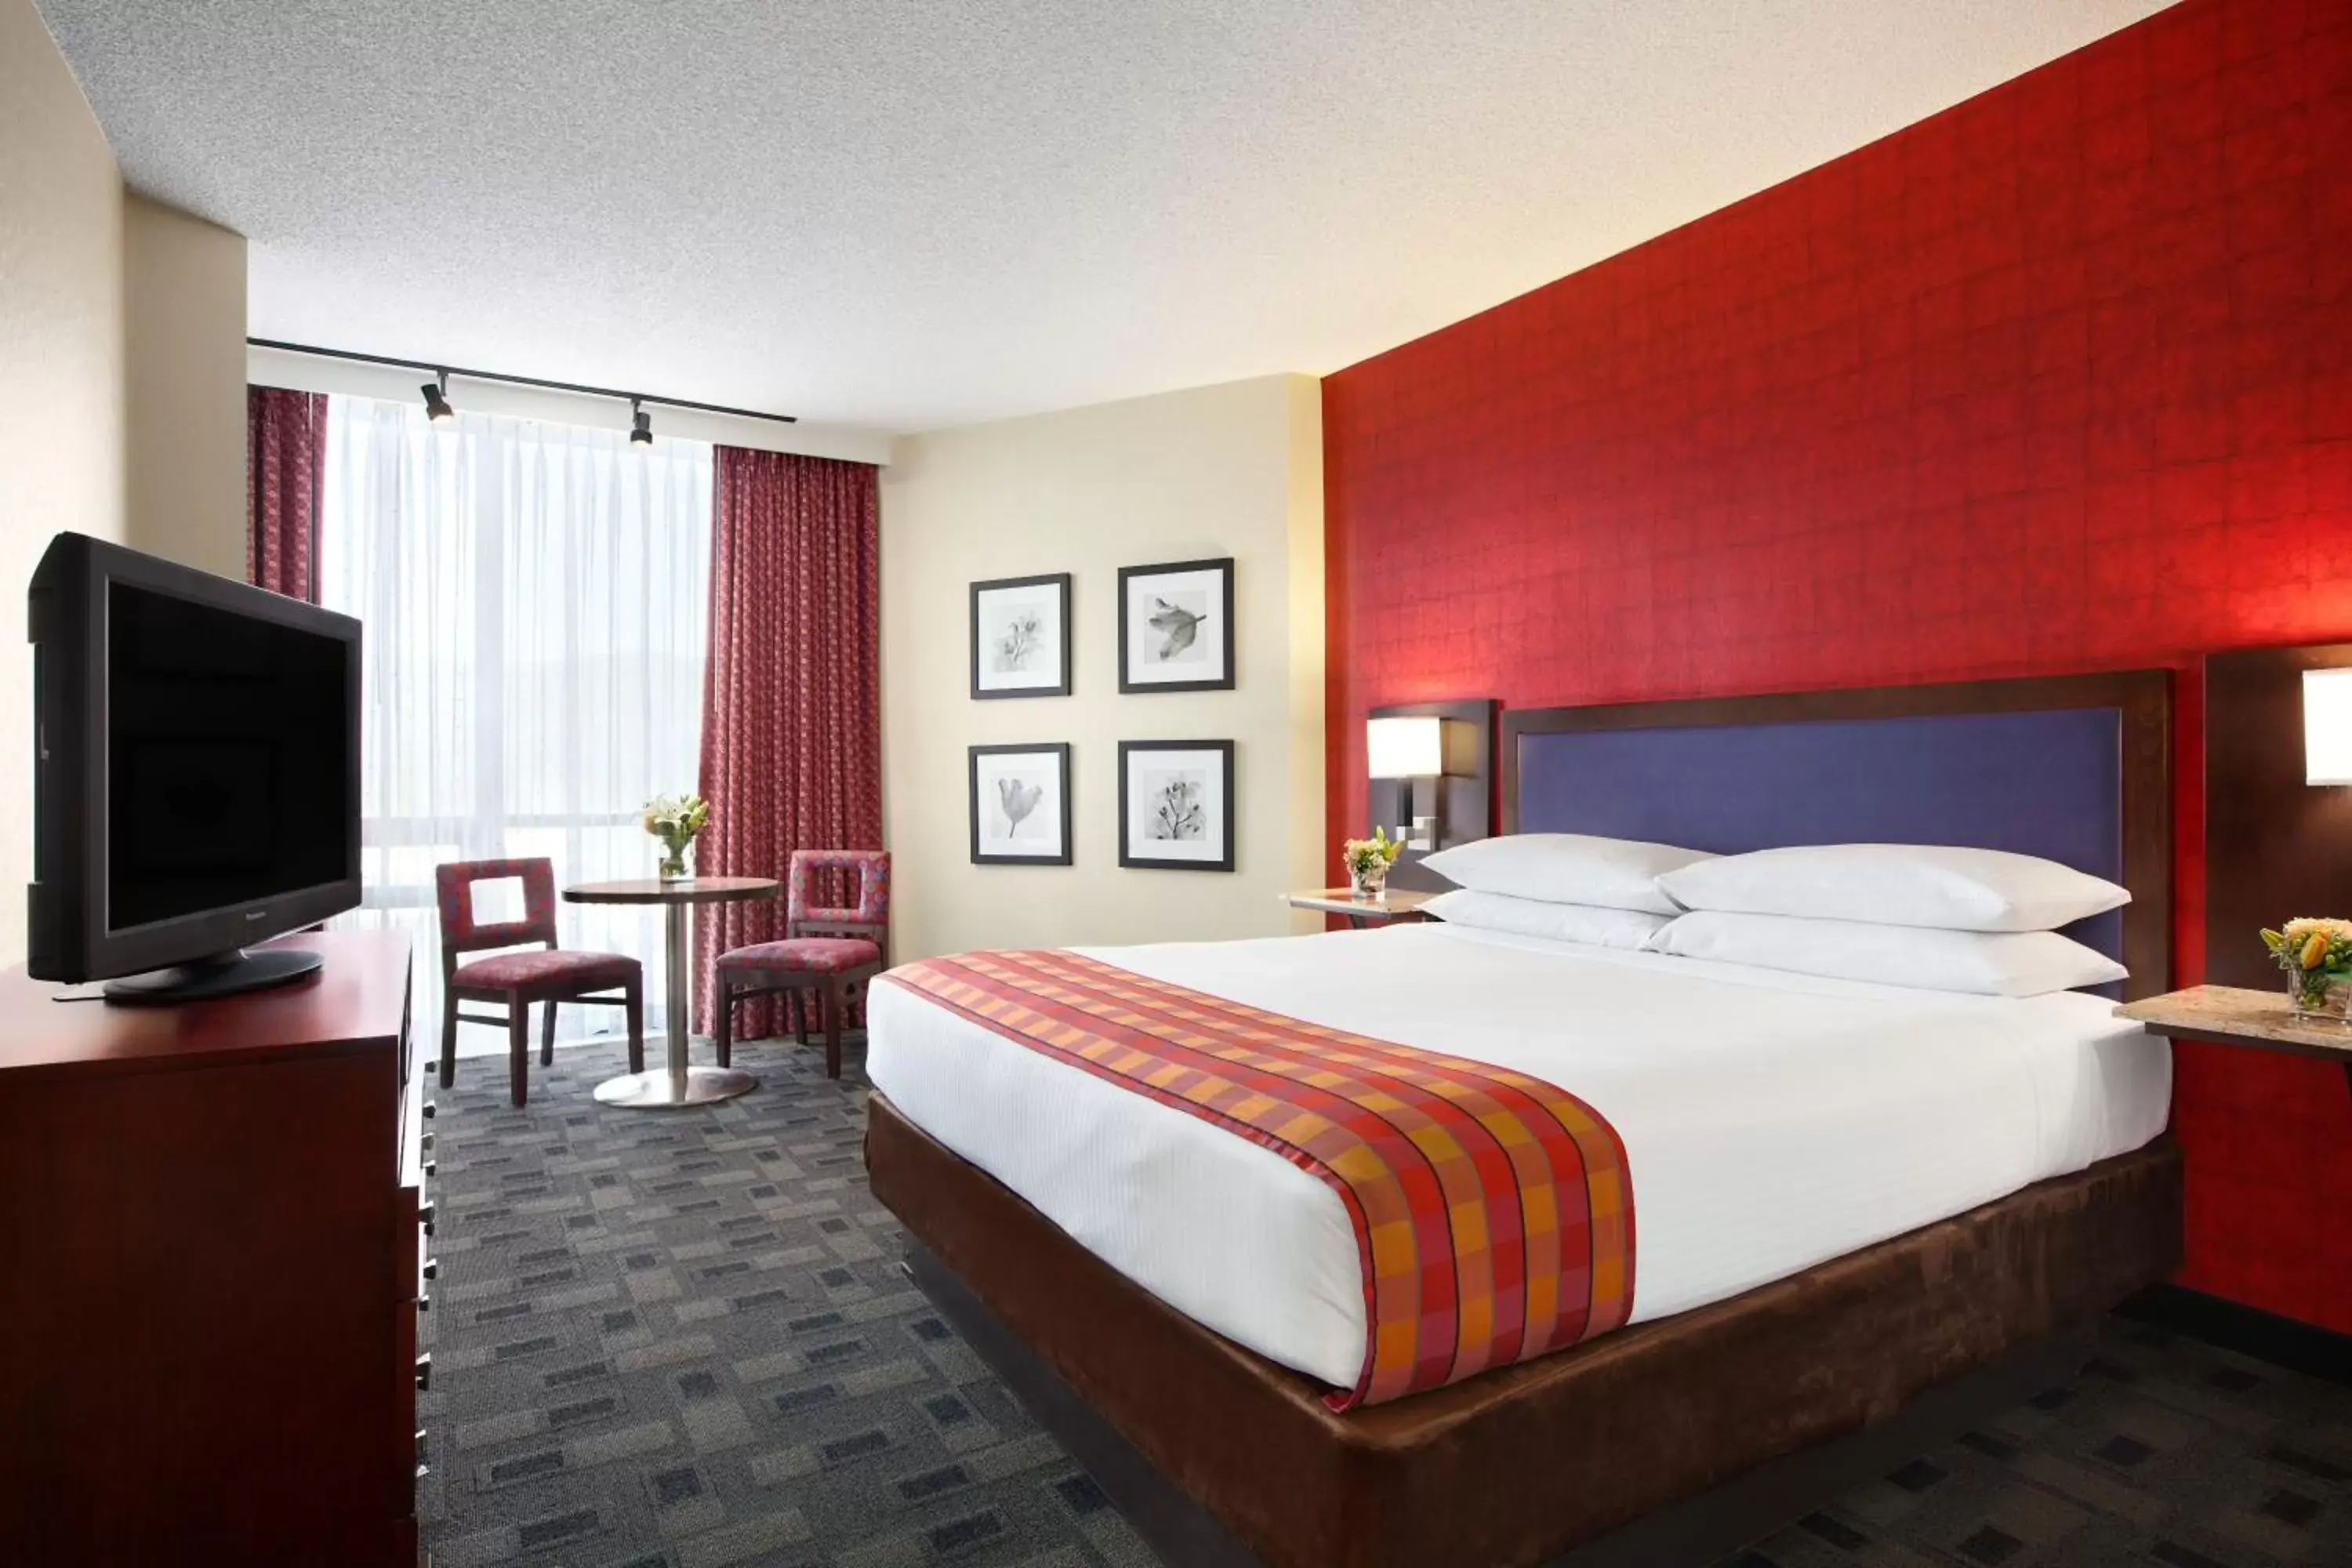 Bed, Room Photo in Harveys Lake Tahoe Hotel & Casino